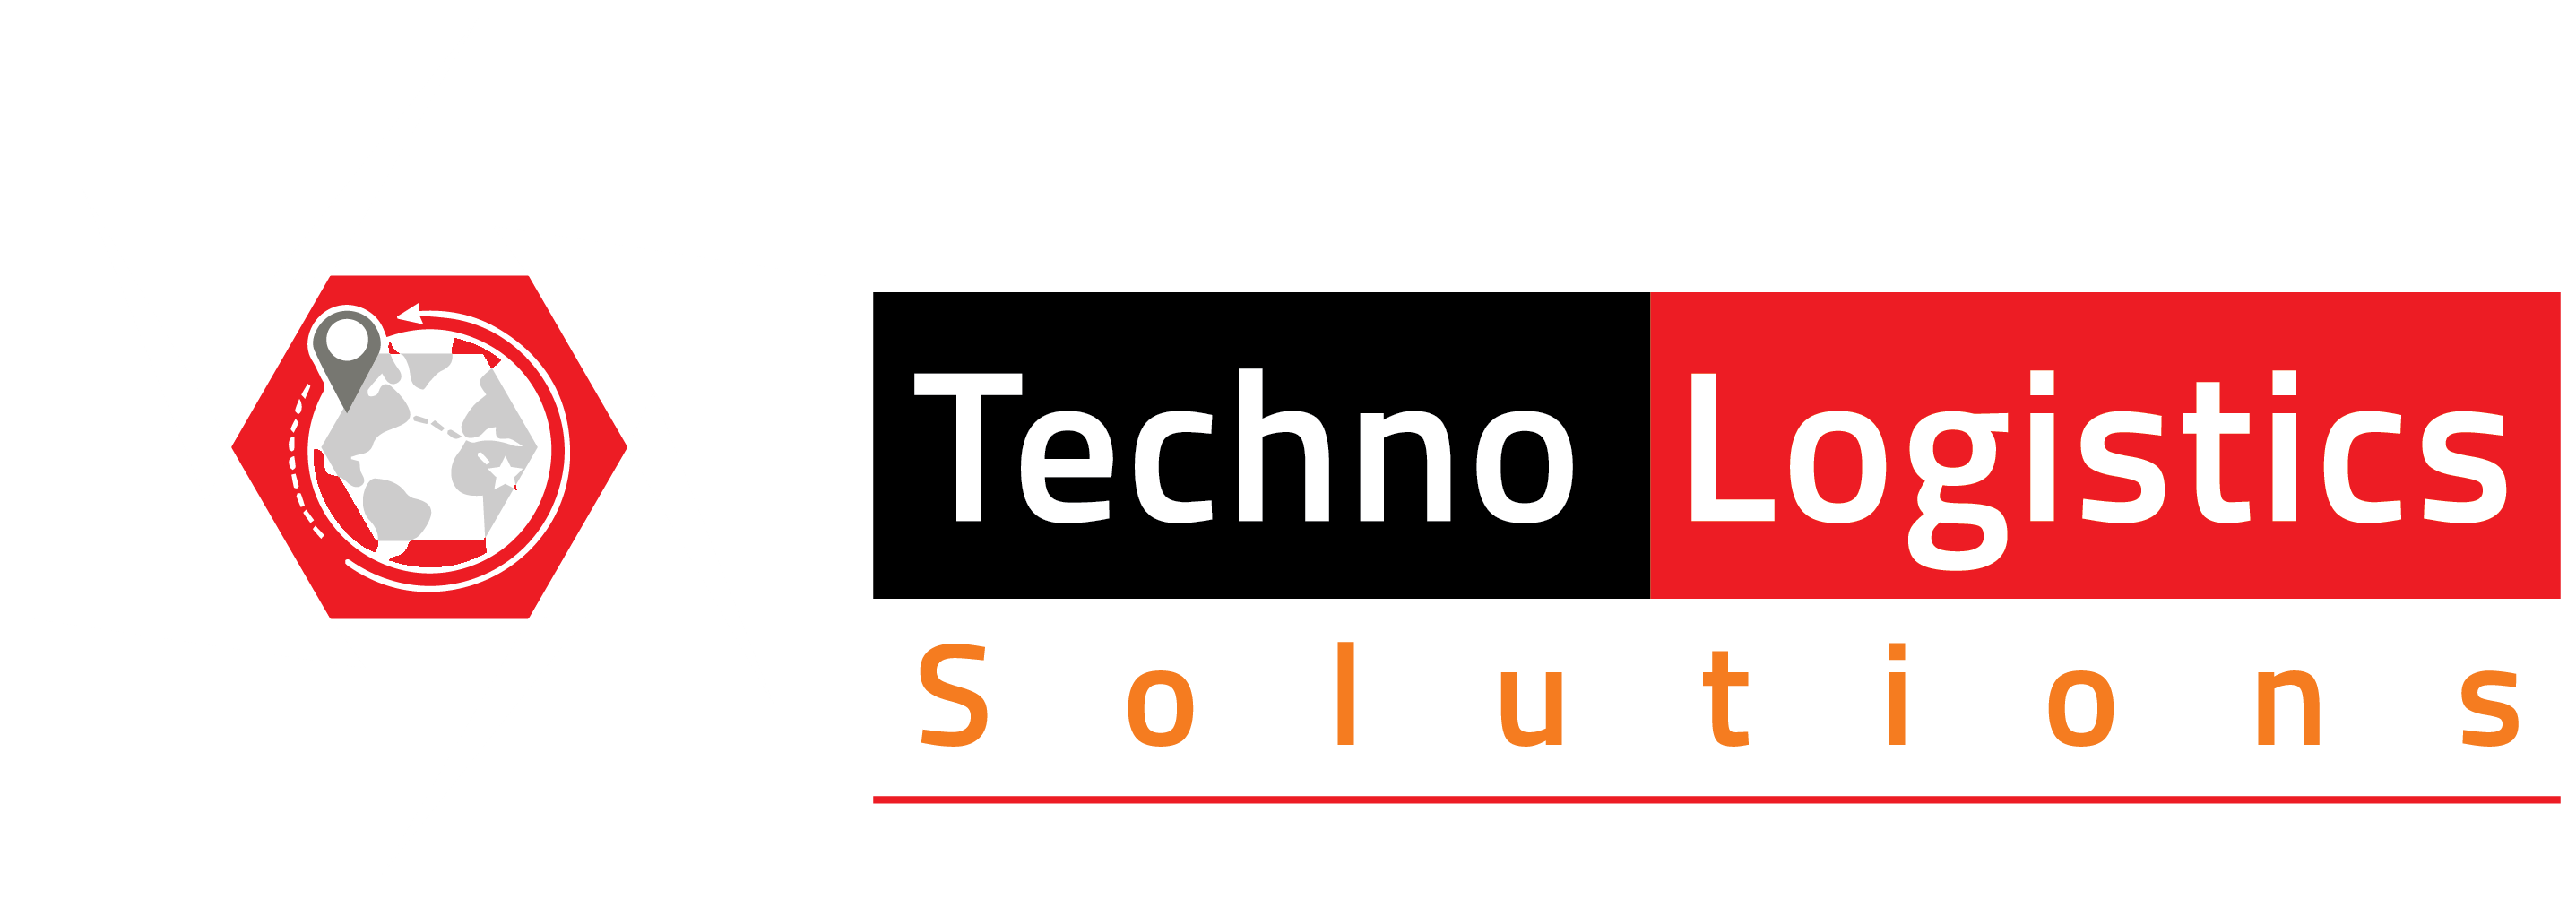 Technologistics Solutions